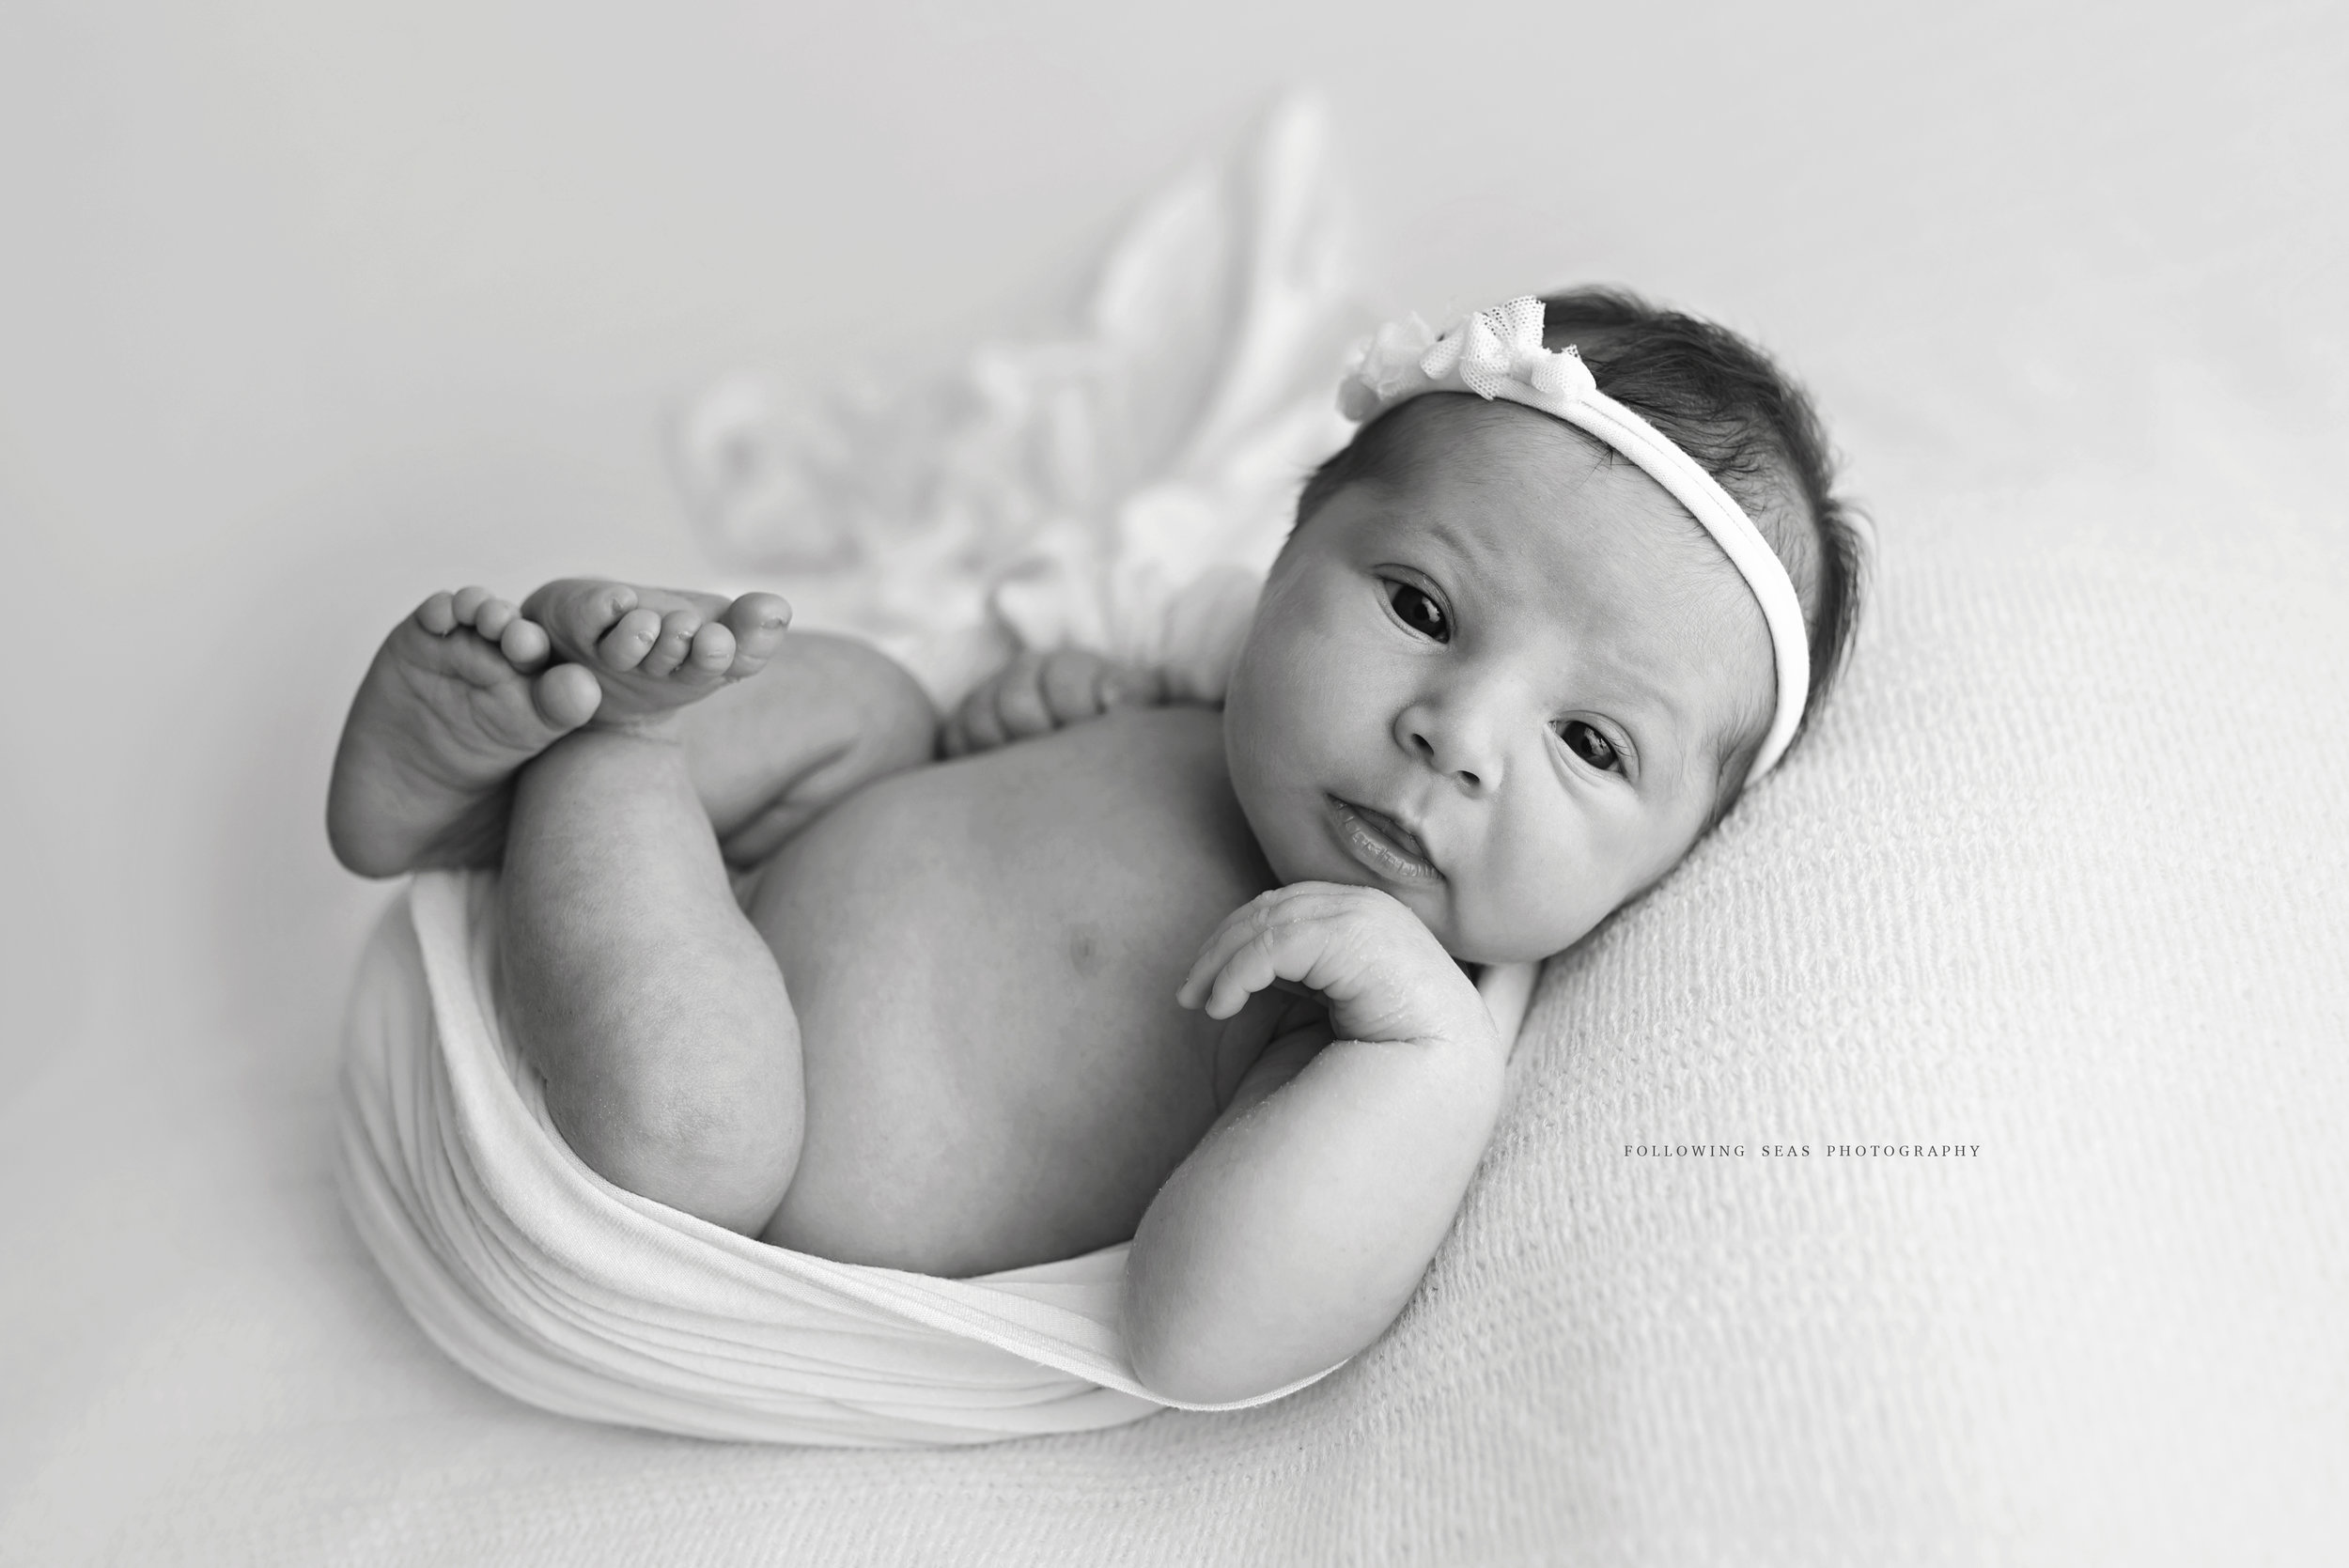 Charleston-Newborn-Photographer-Following-Seas-Photography-fsp_5197BW.jpg